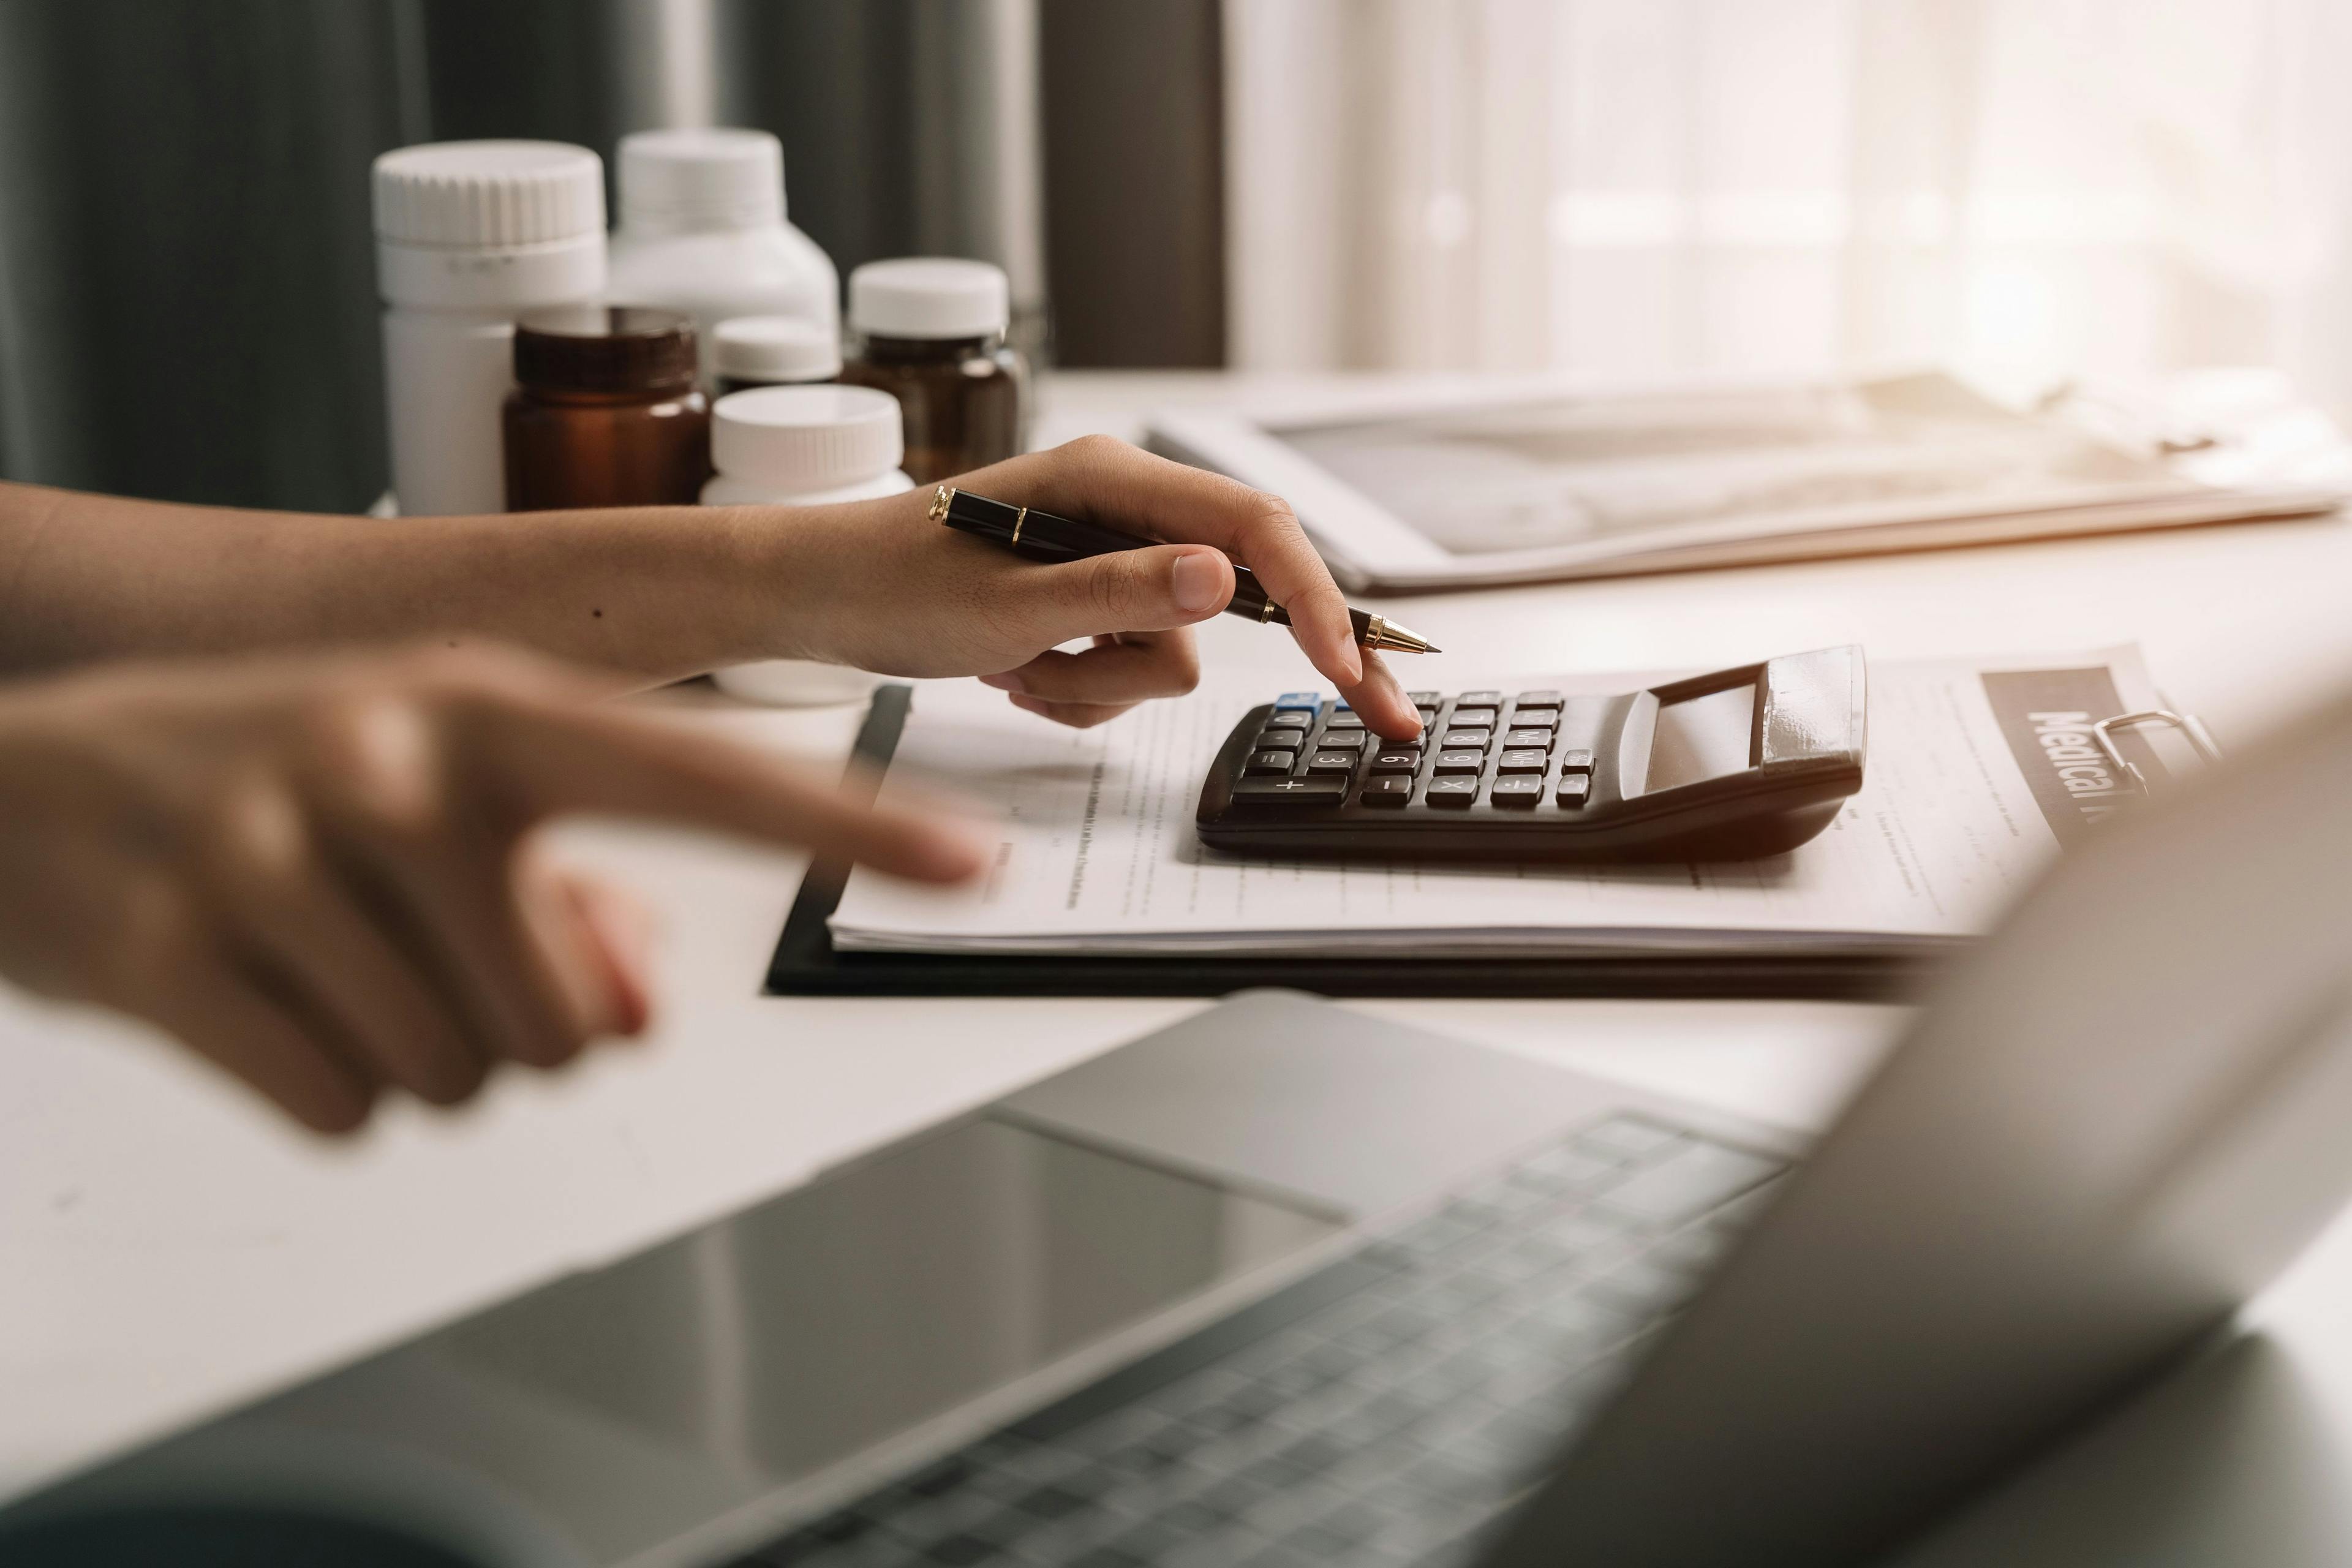 Pharmacist uses a service fee calculator to calculate drug reimbursement, financials